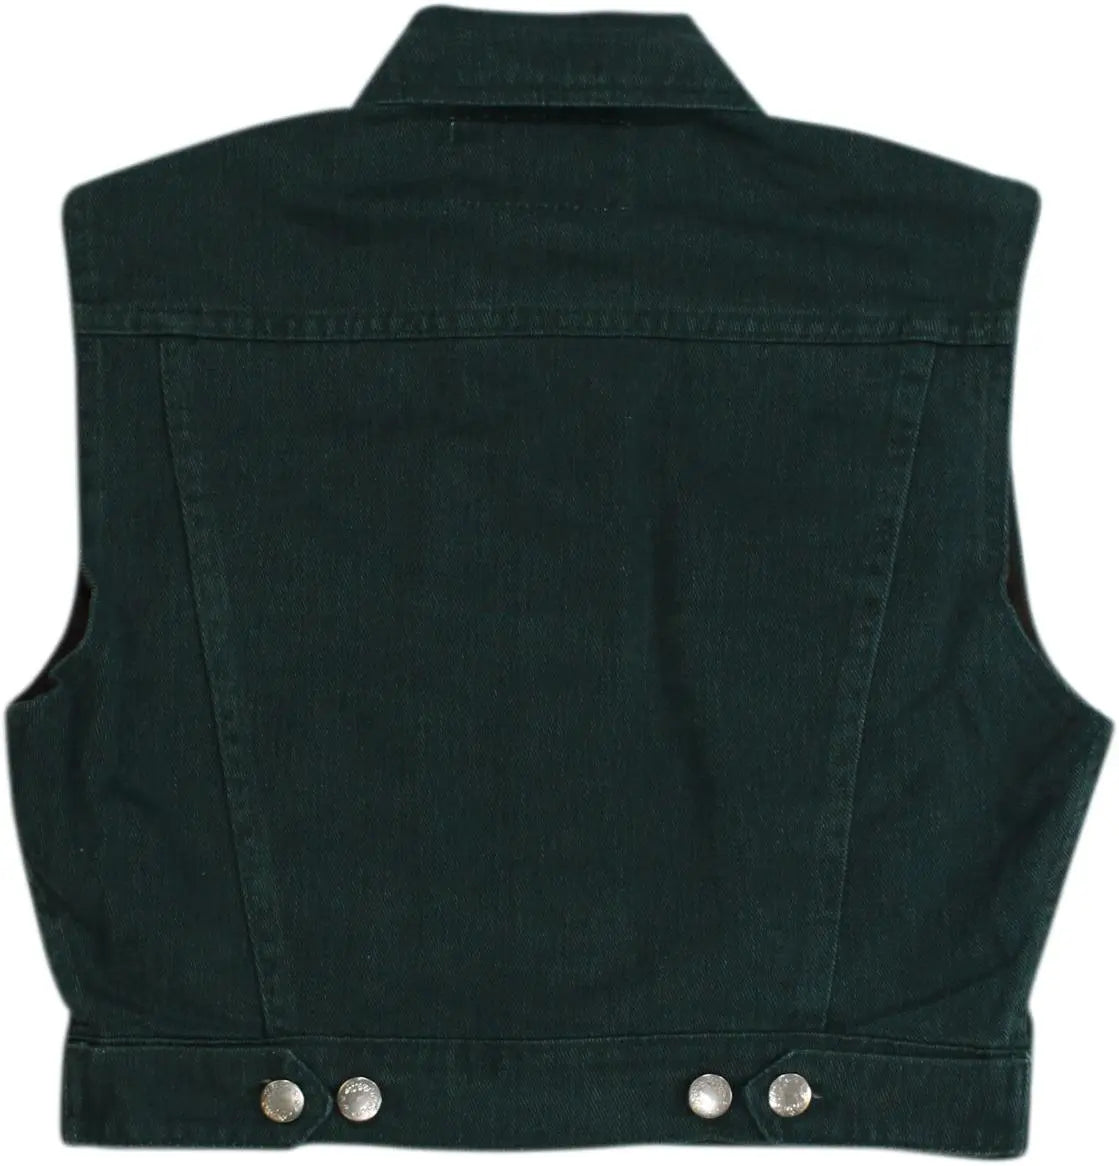 PJG - Green Sleeveless Denim Jacket- ThriftTale.com - Vintage and second handclothing